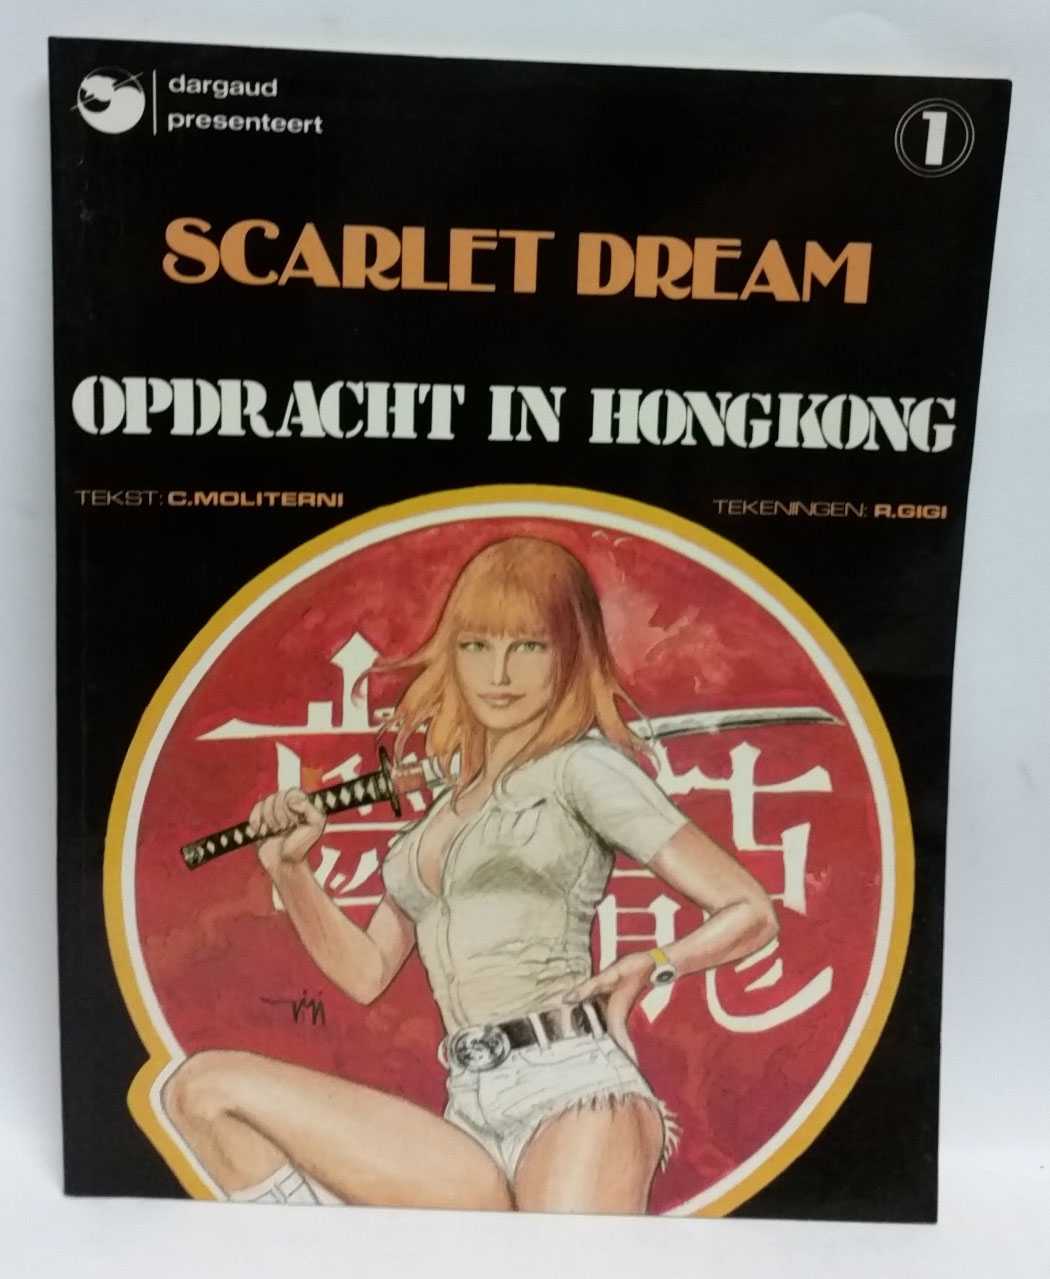 C. Moliterni - Scarlet Dream: Opdracht in Hong Kong